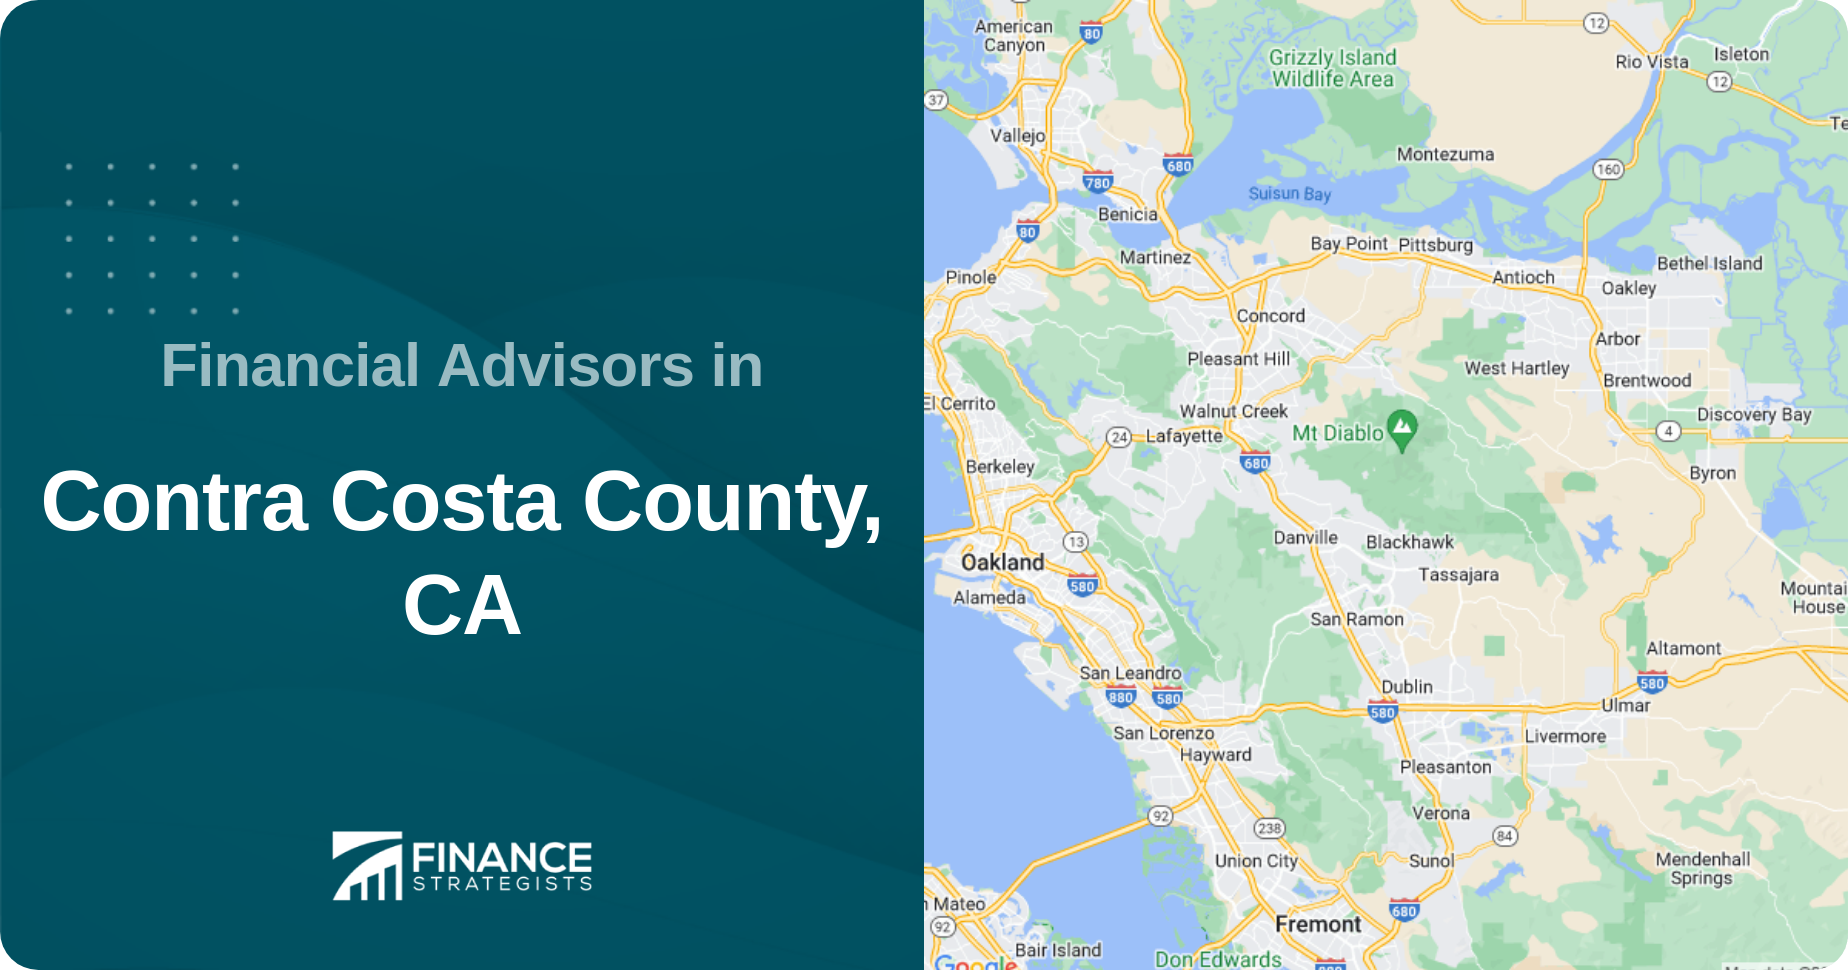 Financial Advisors in Contra Costa County, CA